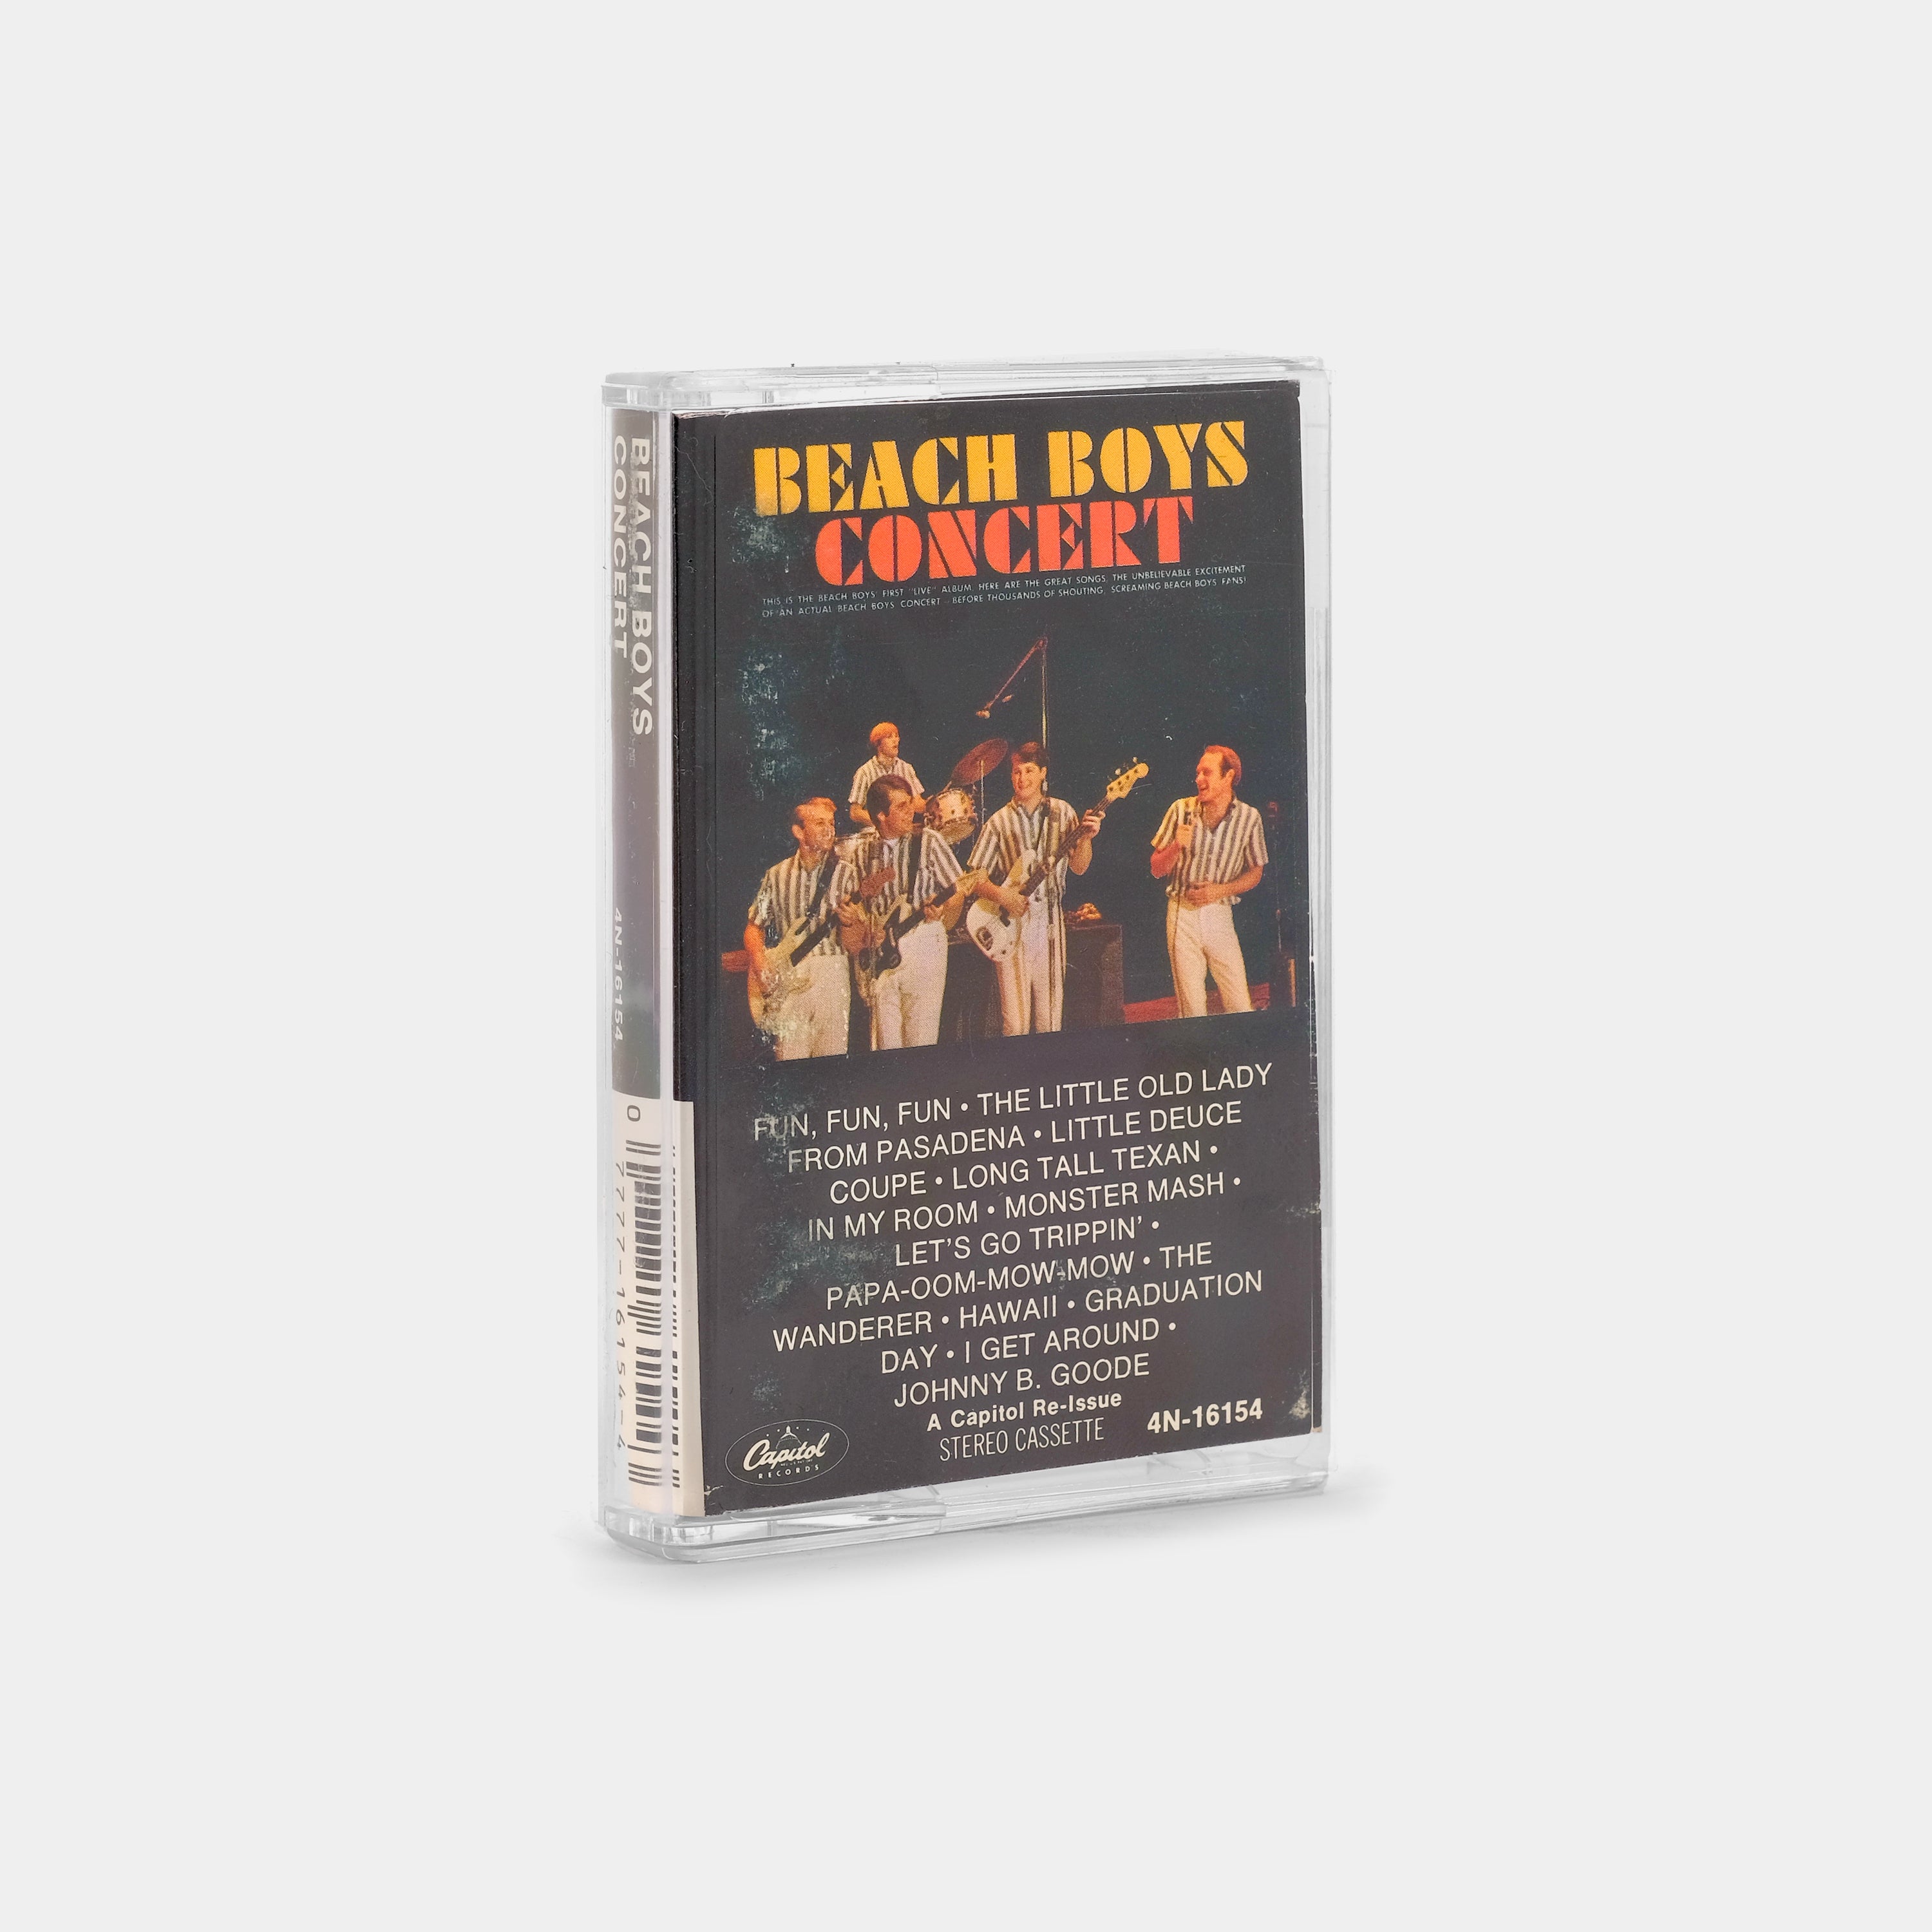 The Beach Boys - Concert Cassette Tape